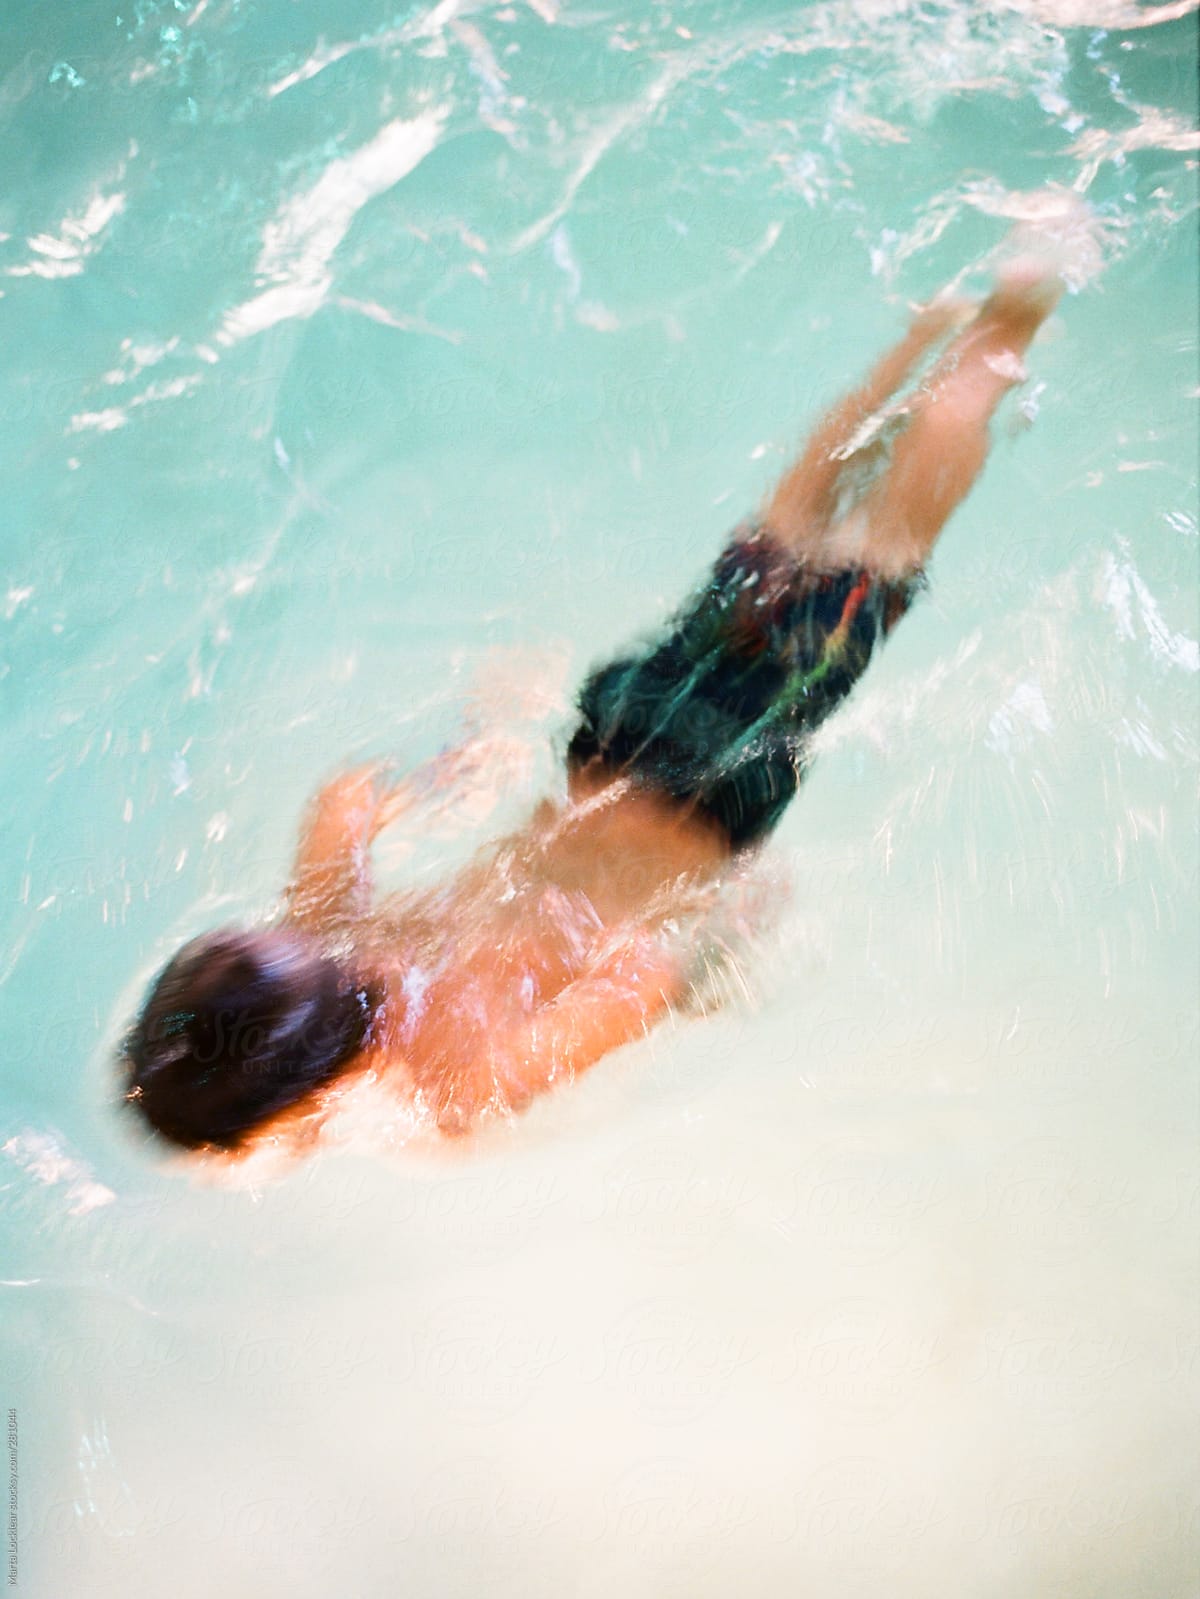 Boy swimming in a pool near the pool light